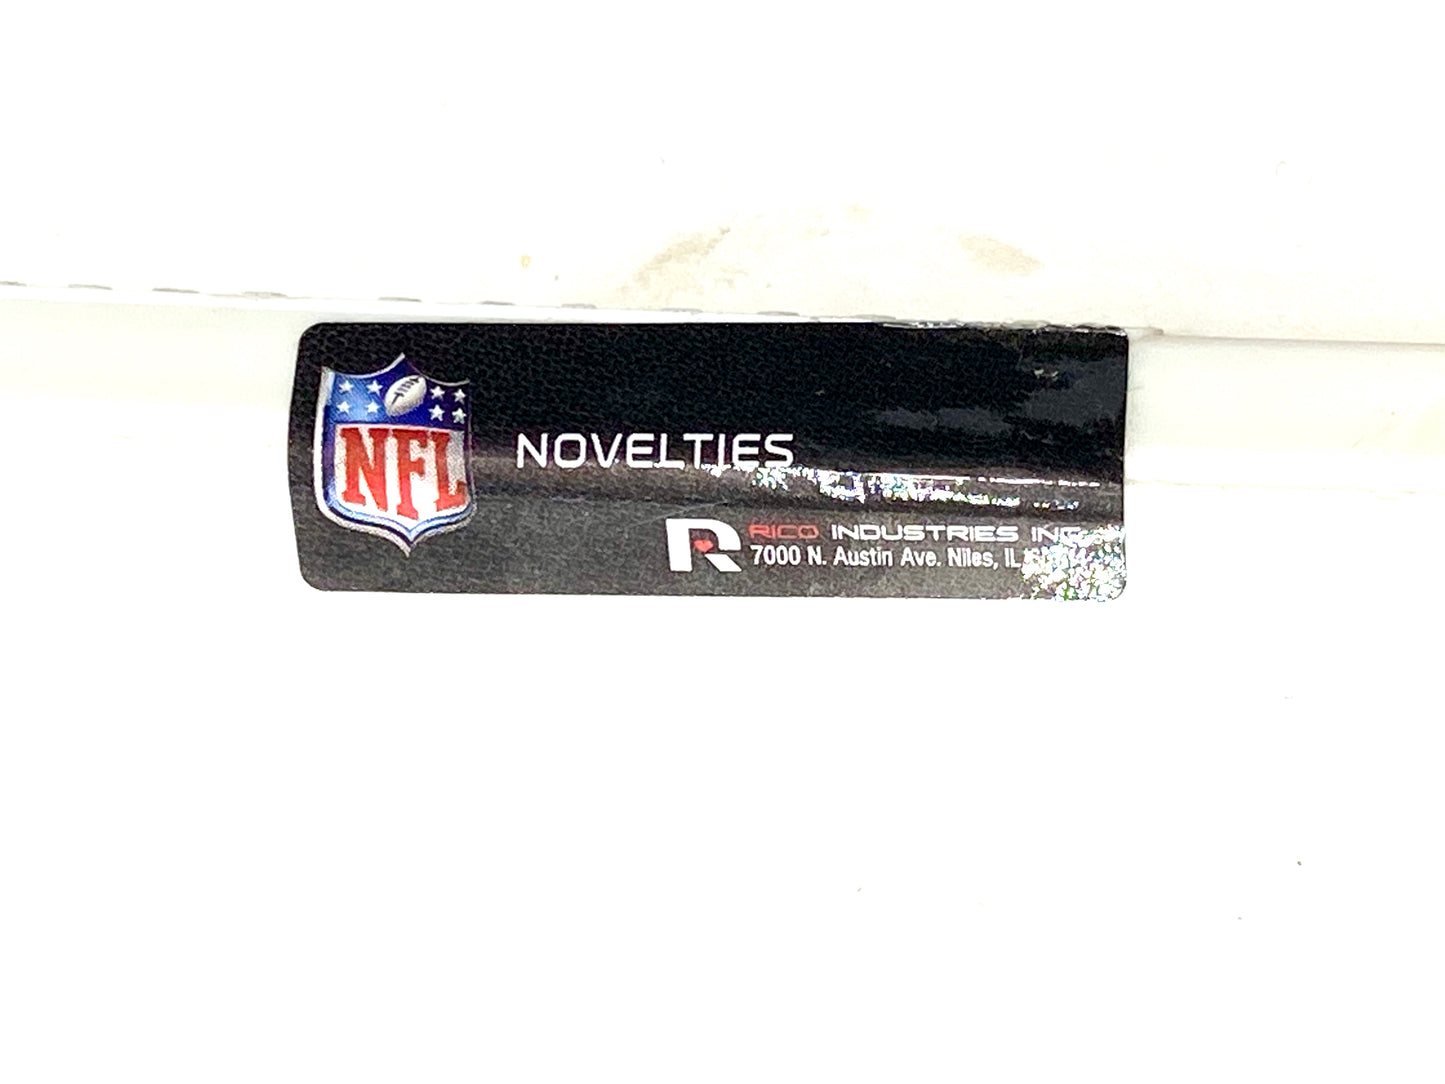 Atlanta Falcons 2016 NFL NFC Champions Car Flag by Rico Industries